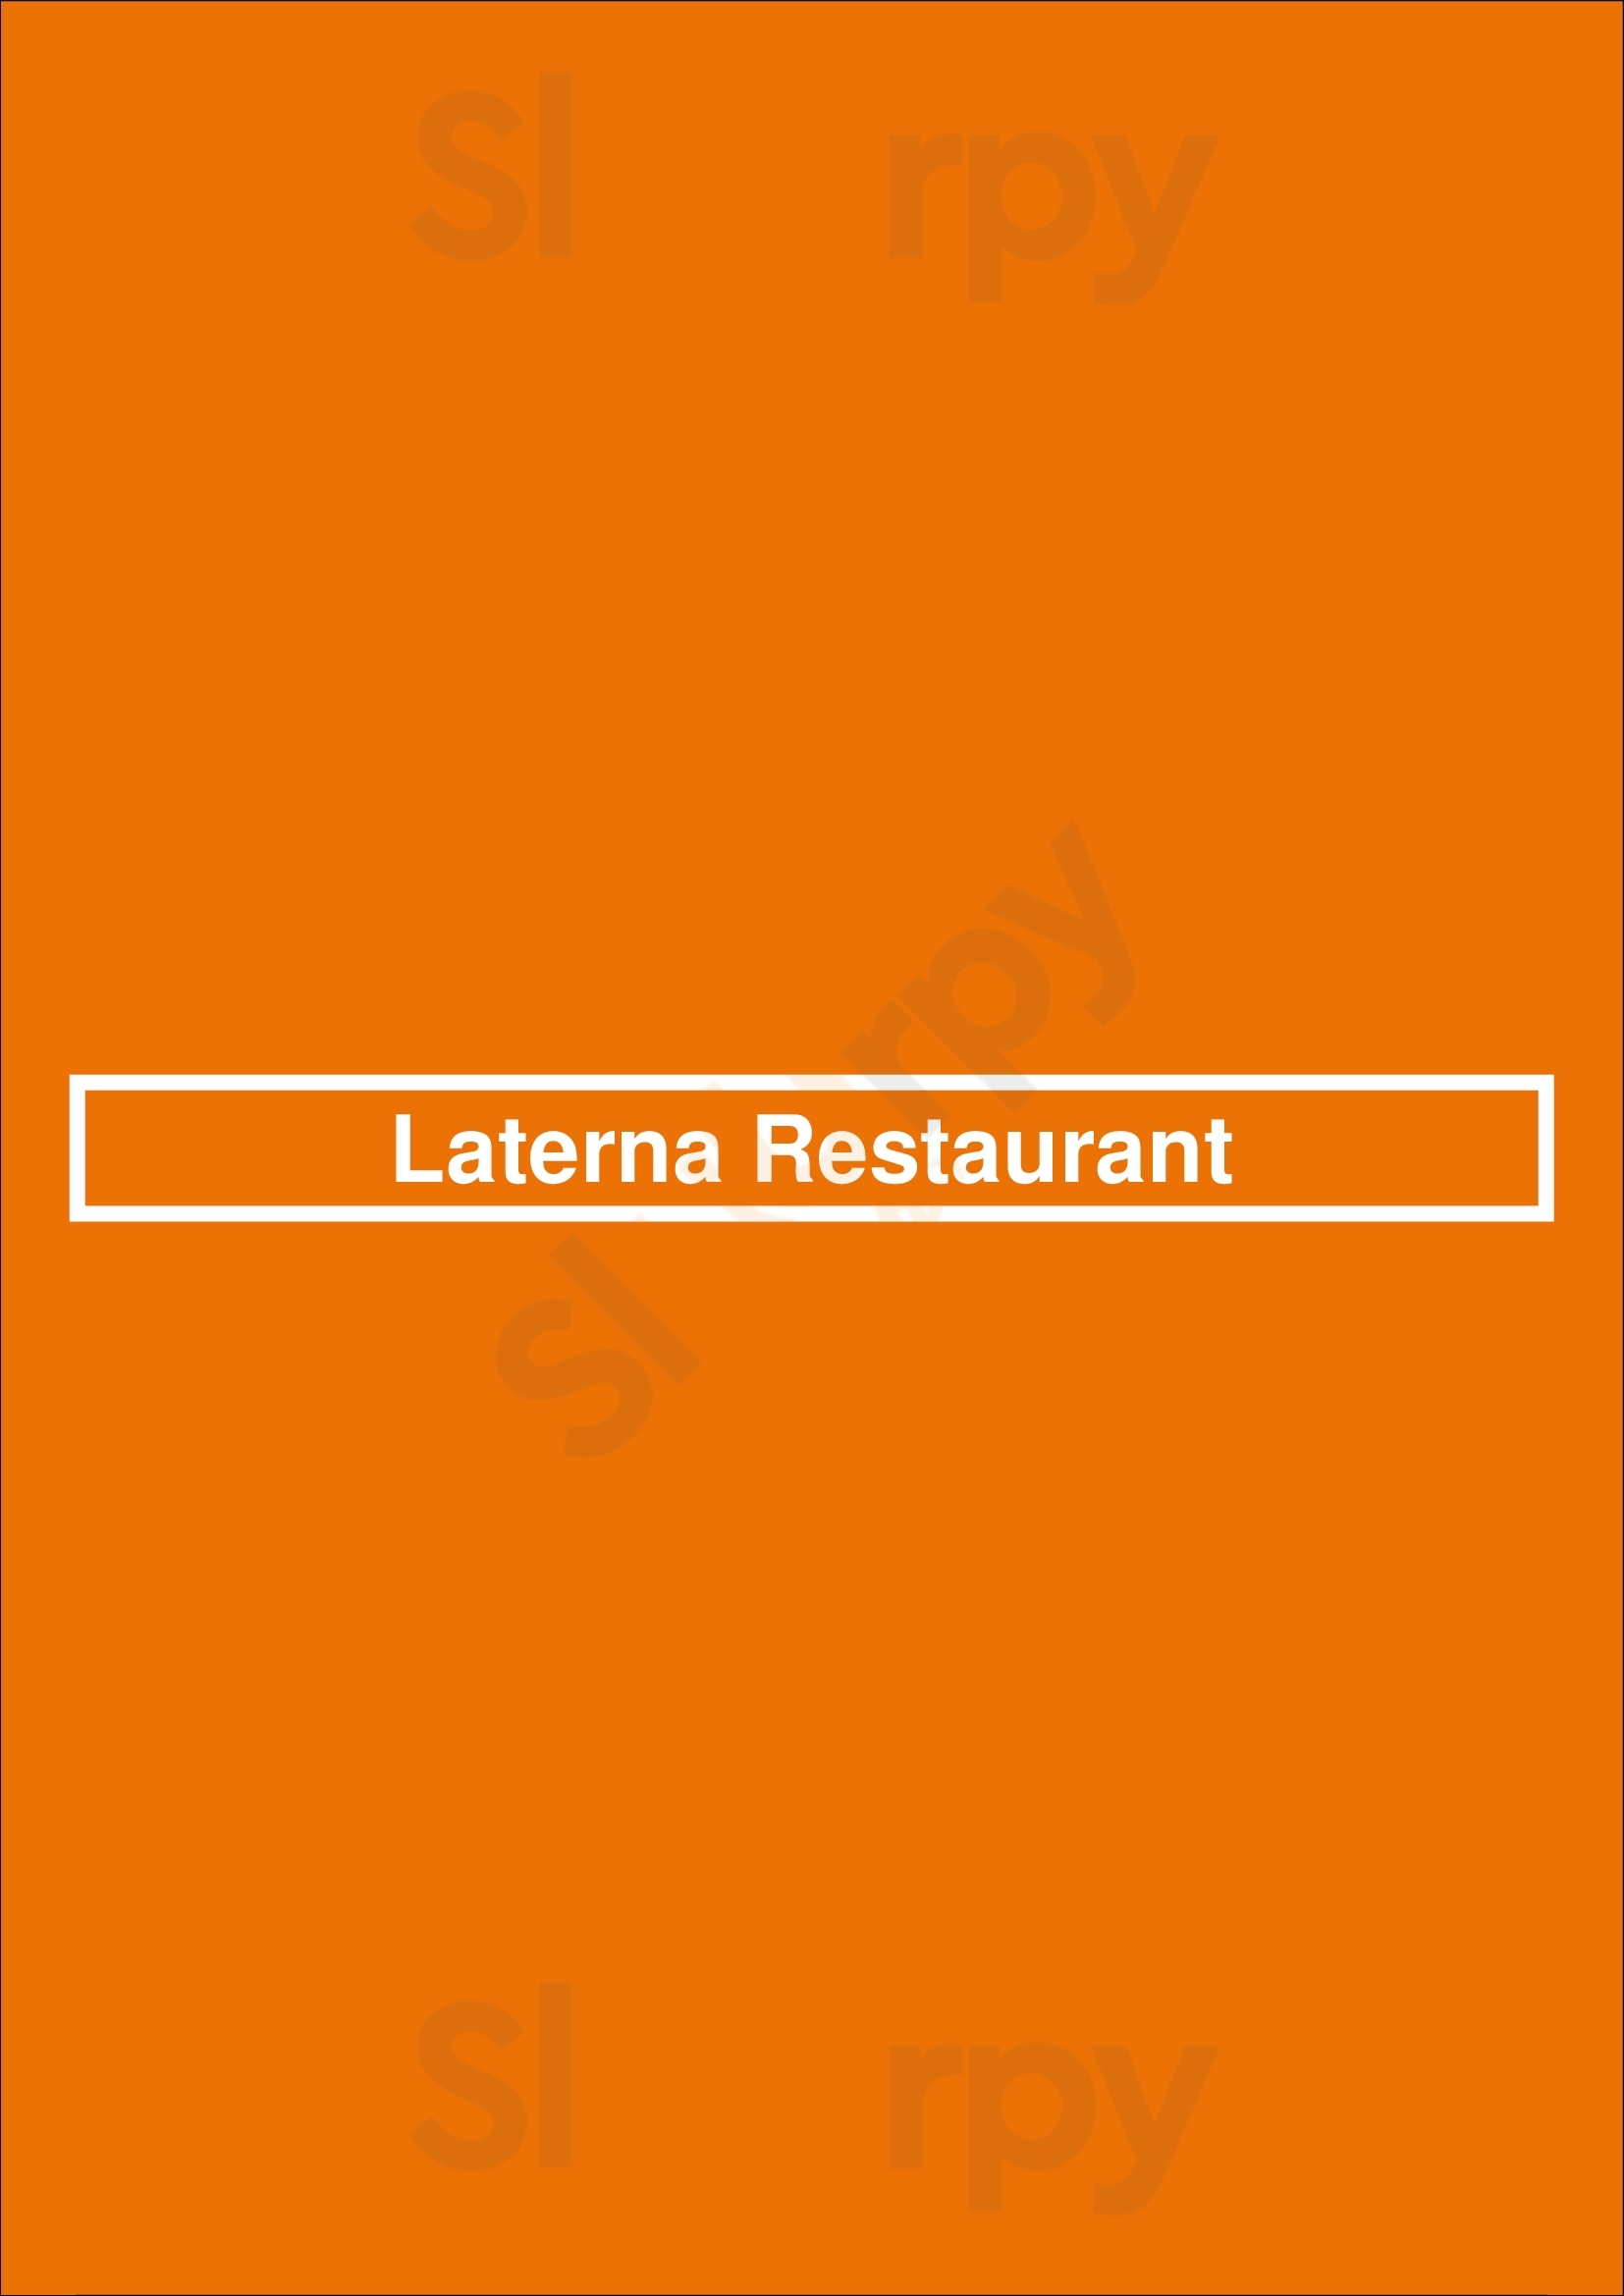 Laterna Restaurant Toronto Menu - 1